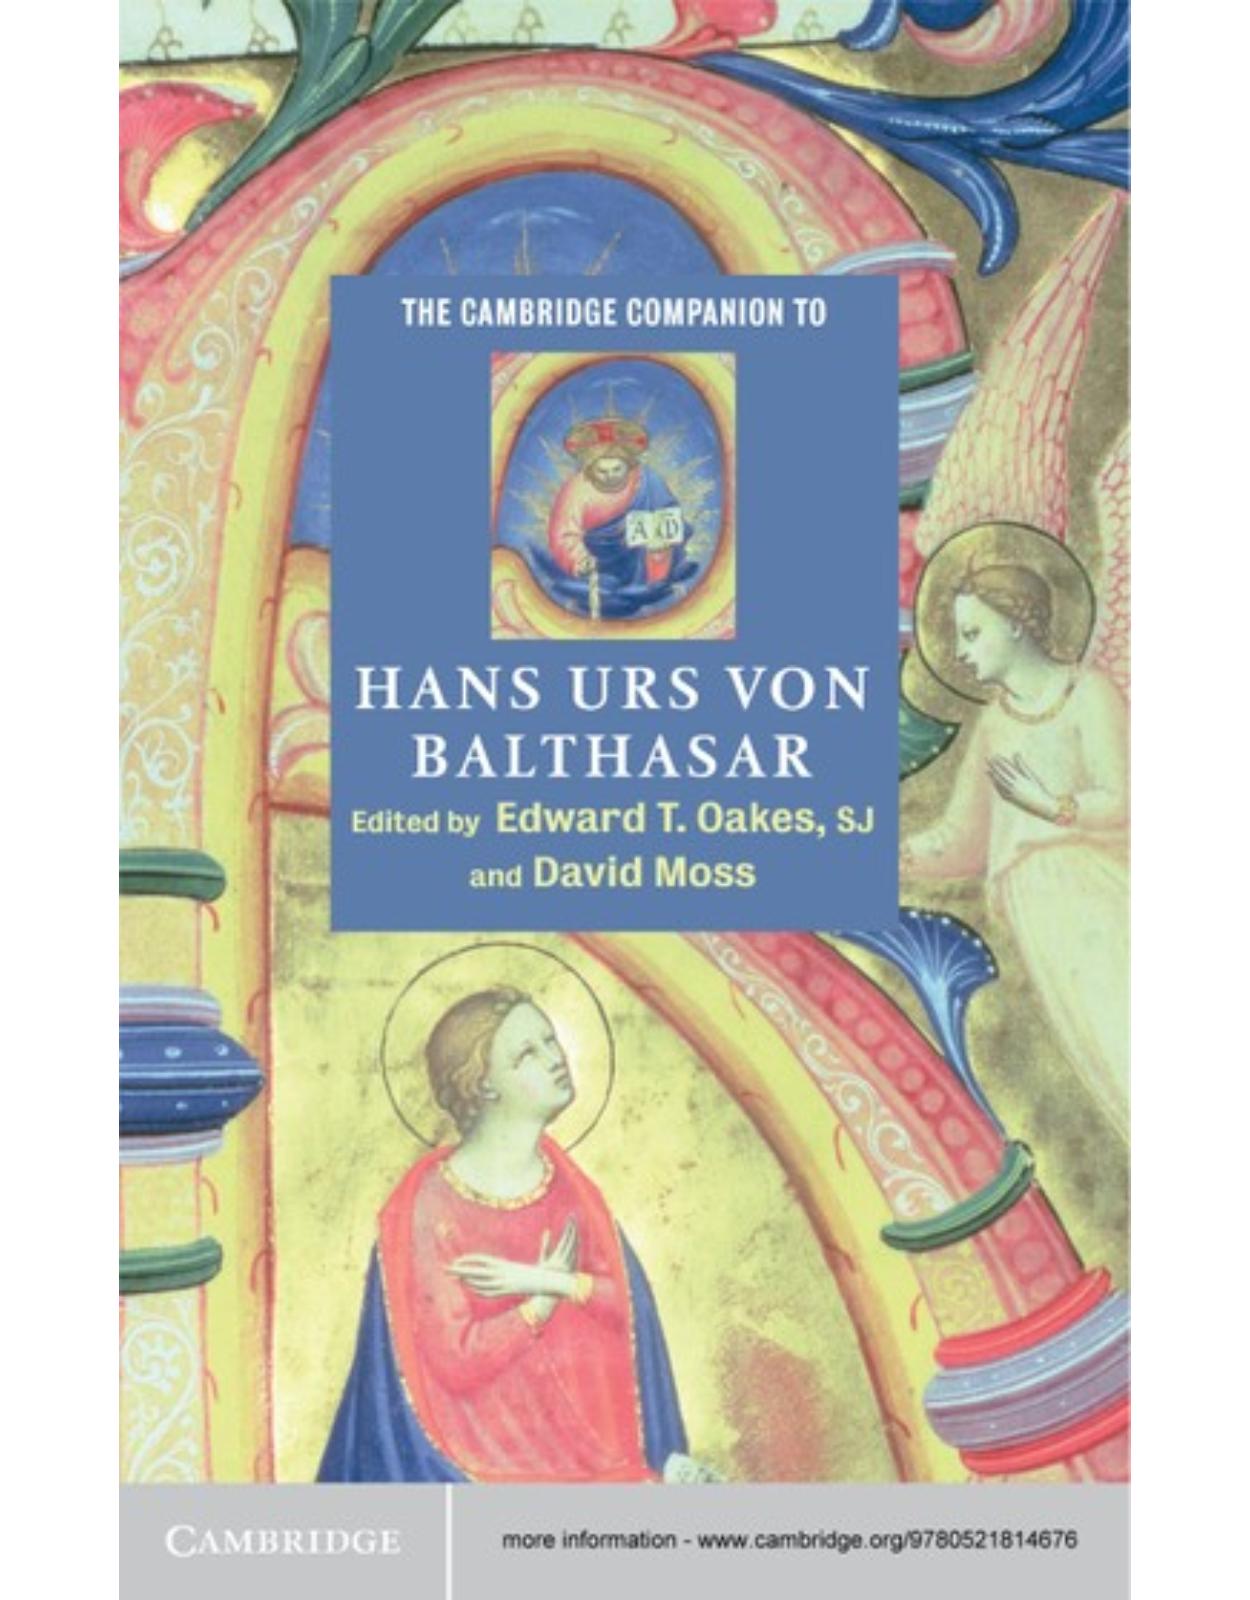 The Cambridge Companion to Hans Urs von Balthasar (Cambridge Companions to Religion)